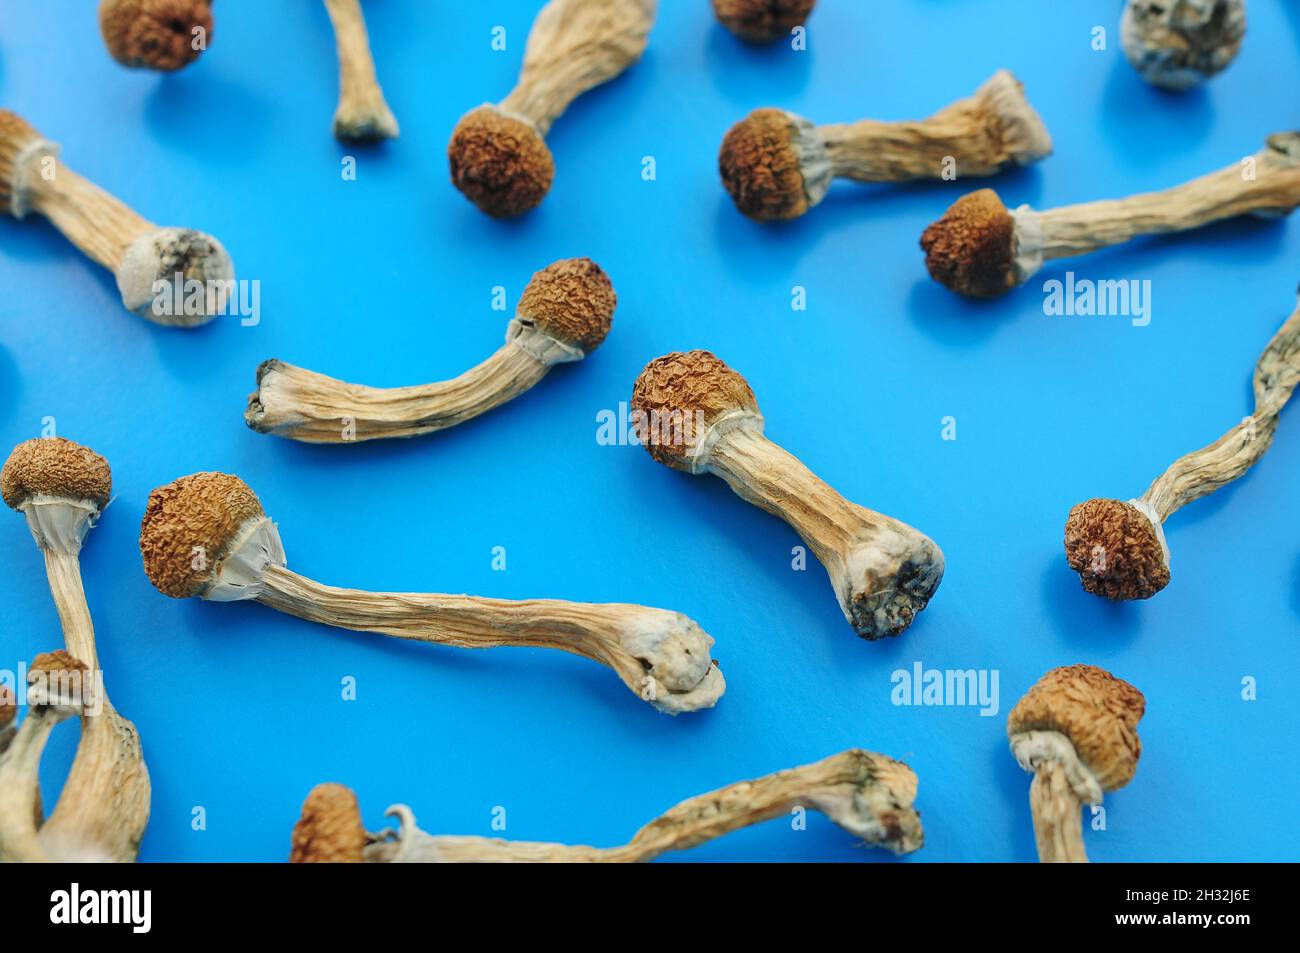 Pattern of dried psilocybin mushrooms on bright blue background. Psychedelic magic mushroom Golden Teacher. Medical usage. Microdosing concept. Stock Photo